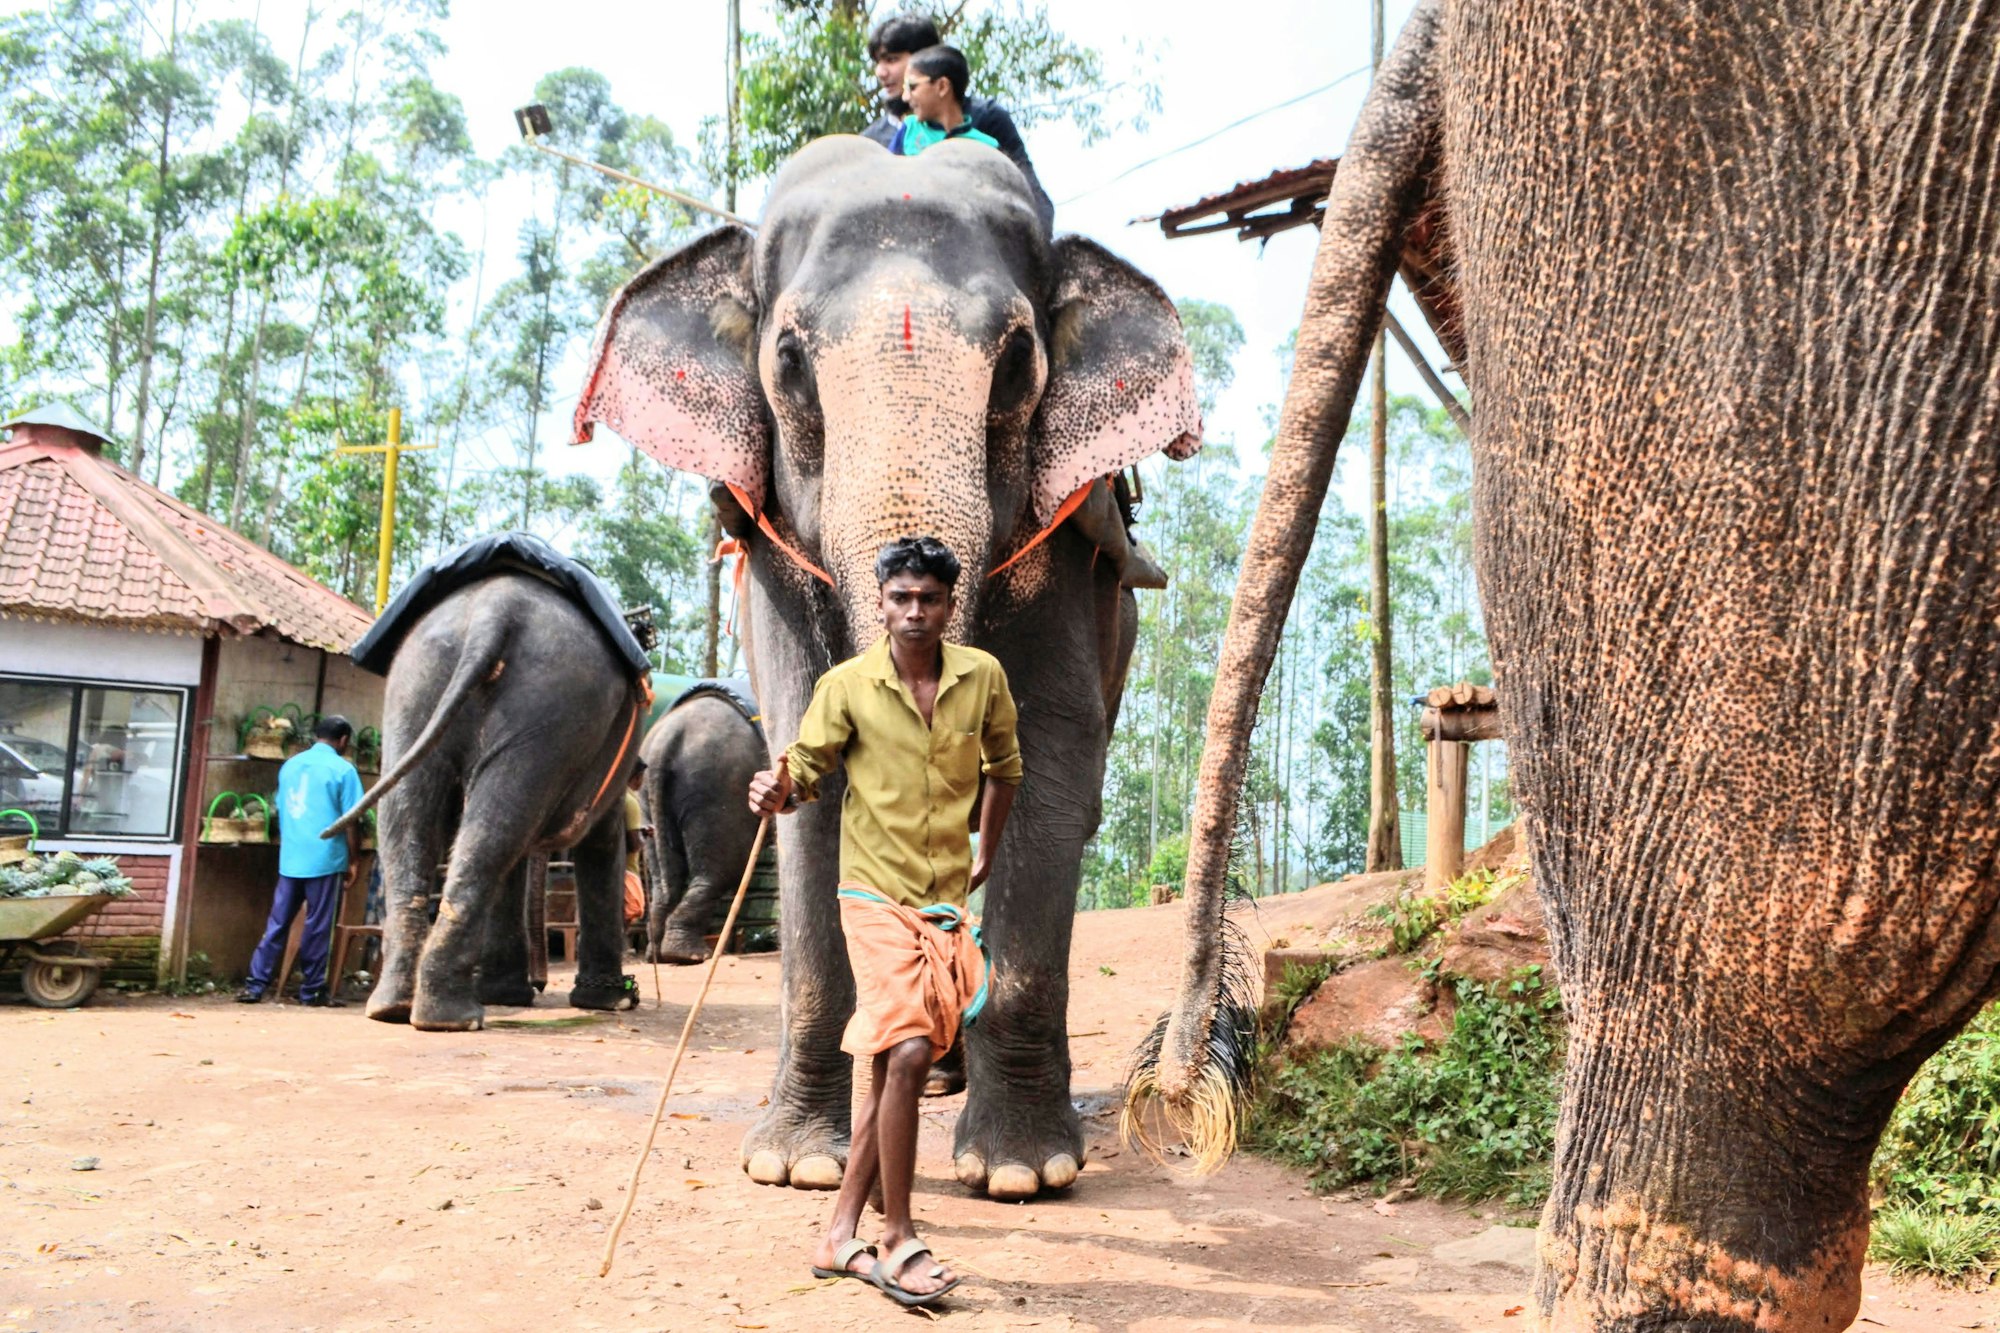 Elephant rides in Kerala India